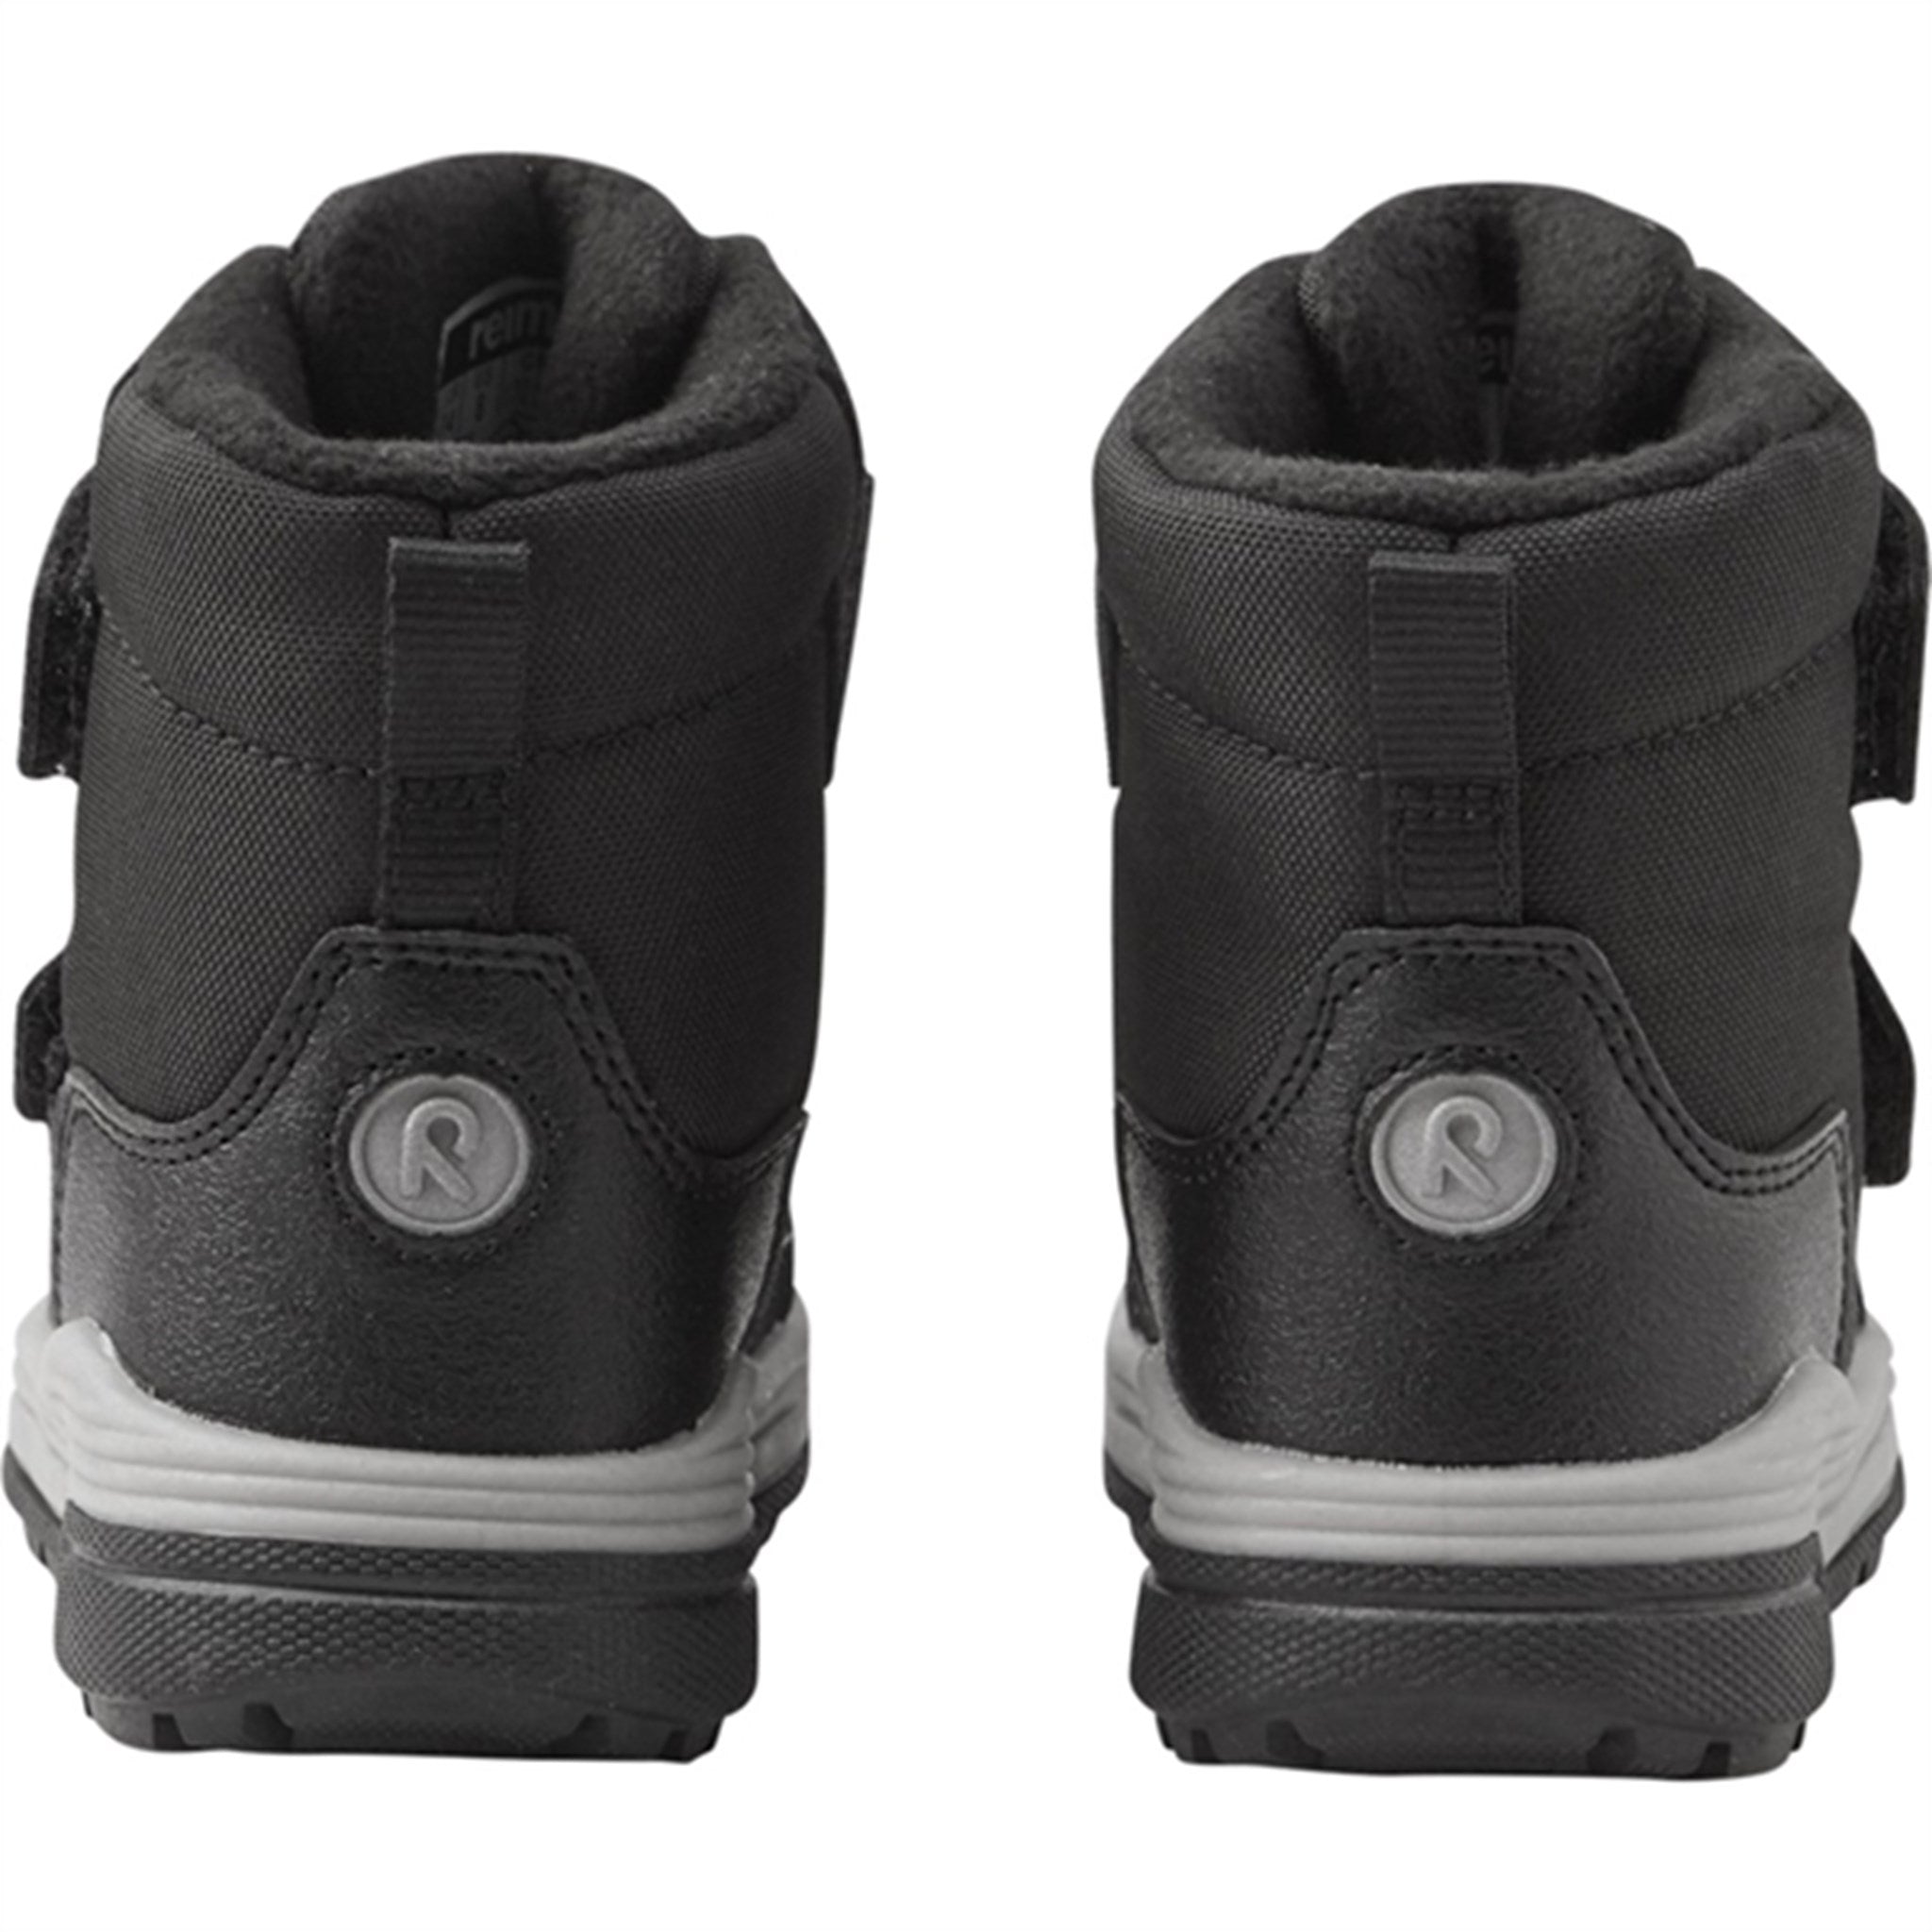 Reima Reimatec Waterproof Shoes Qing Black 5